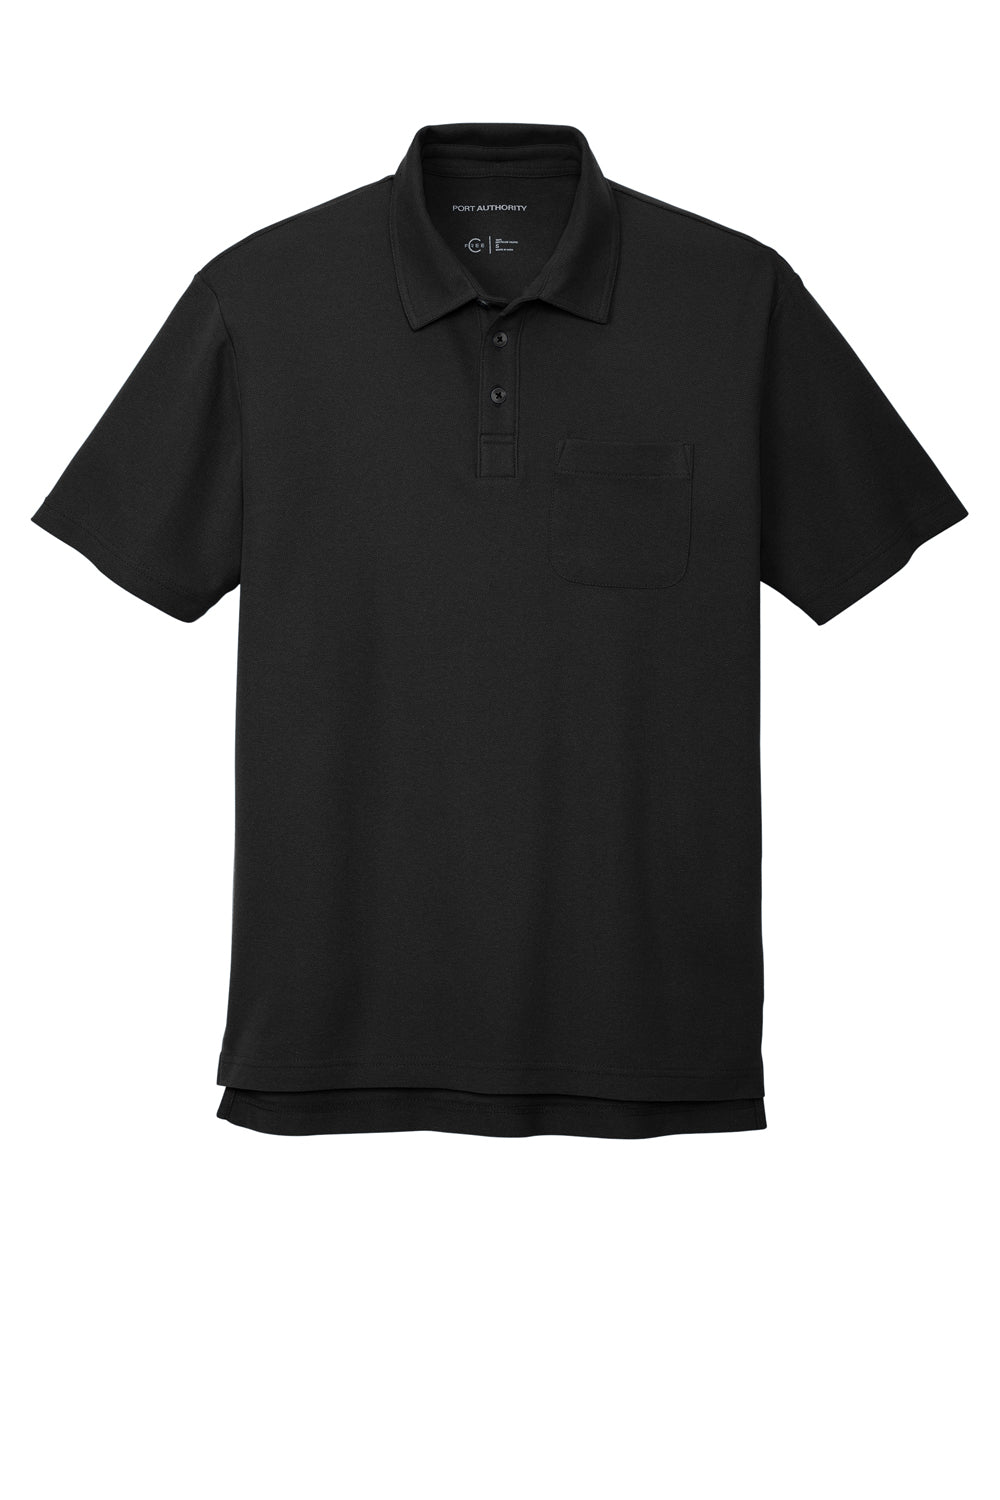 Port Authority K868 Mens C-FREE Pique Short Sleeve Polo Shirt w/ Pocket Black Flat Front